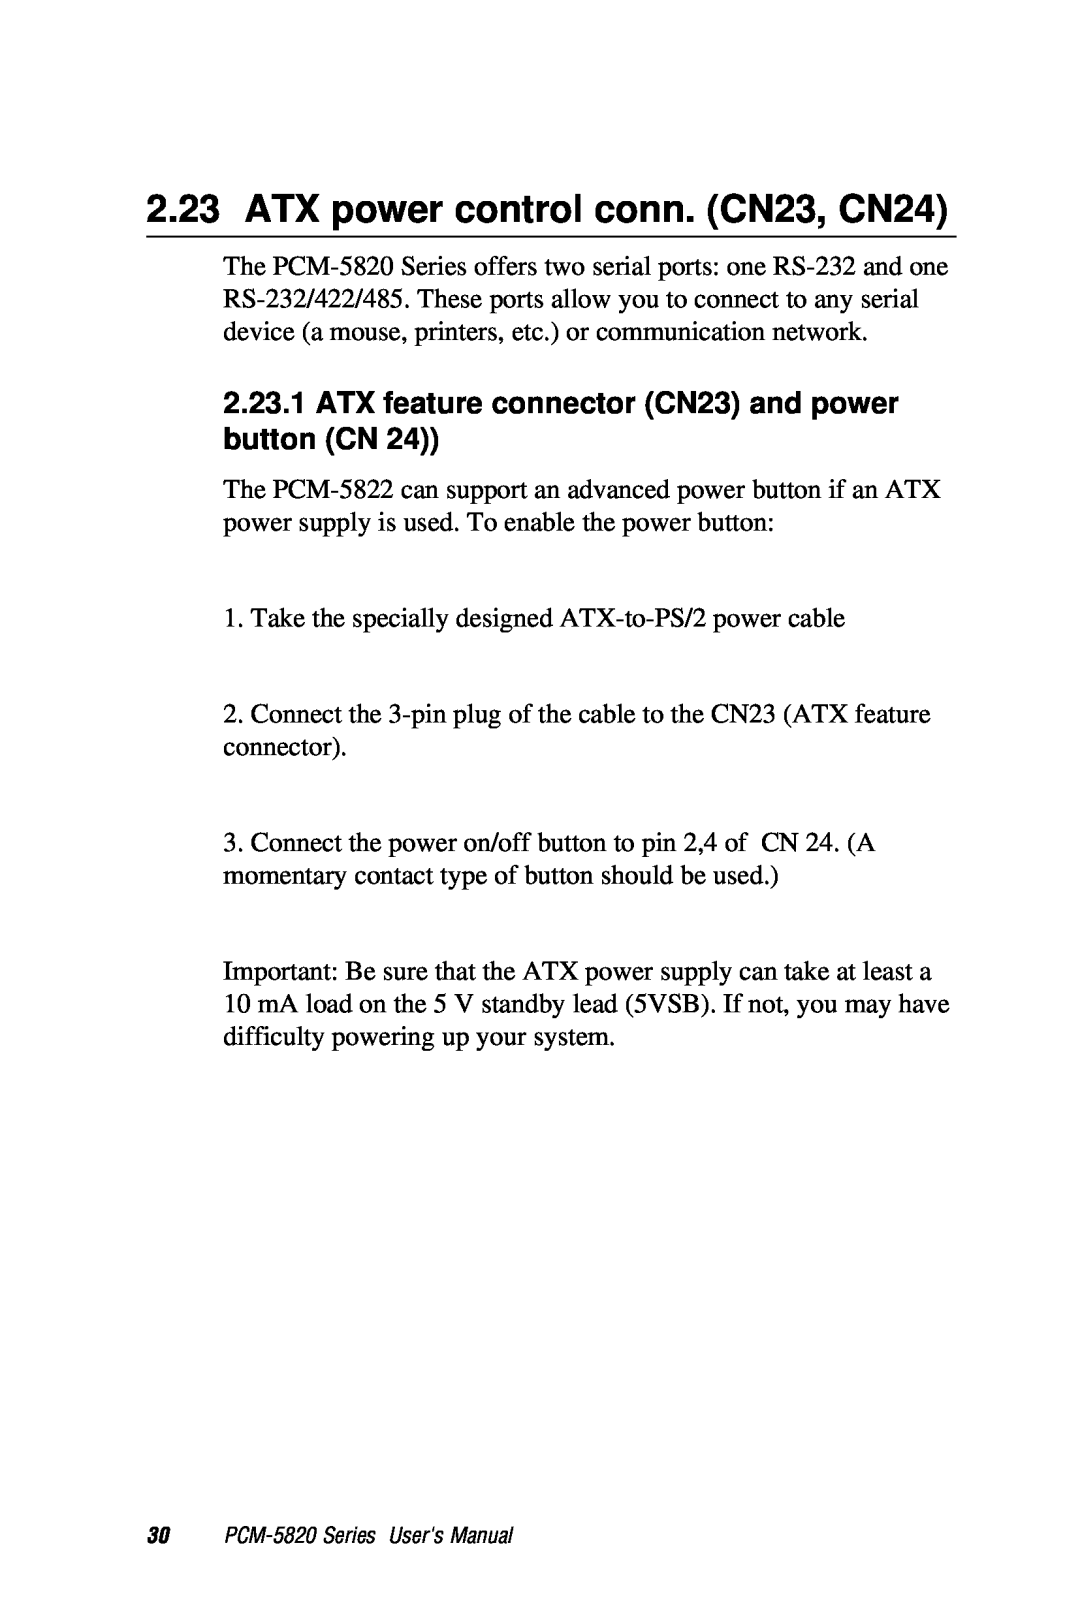 AMD PCM-5820 manual ATX power control conn. CN23, CN24, ATX feature connector CN23 and power button CN 